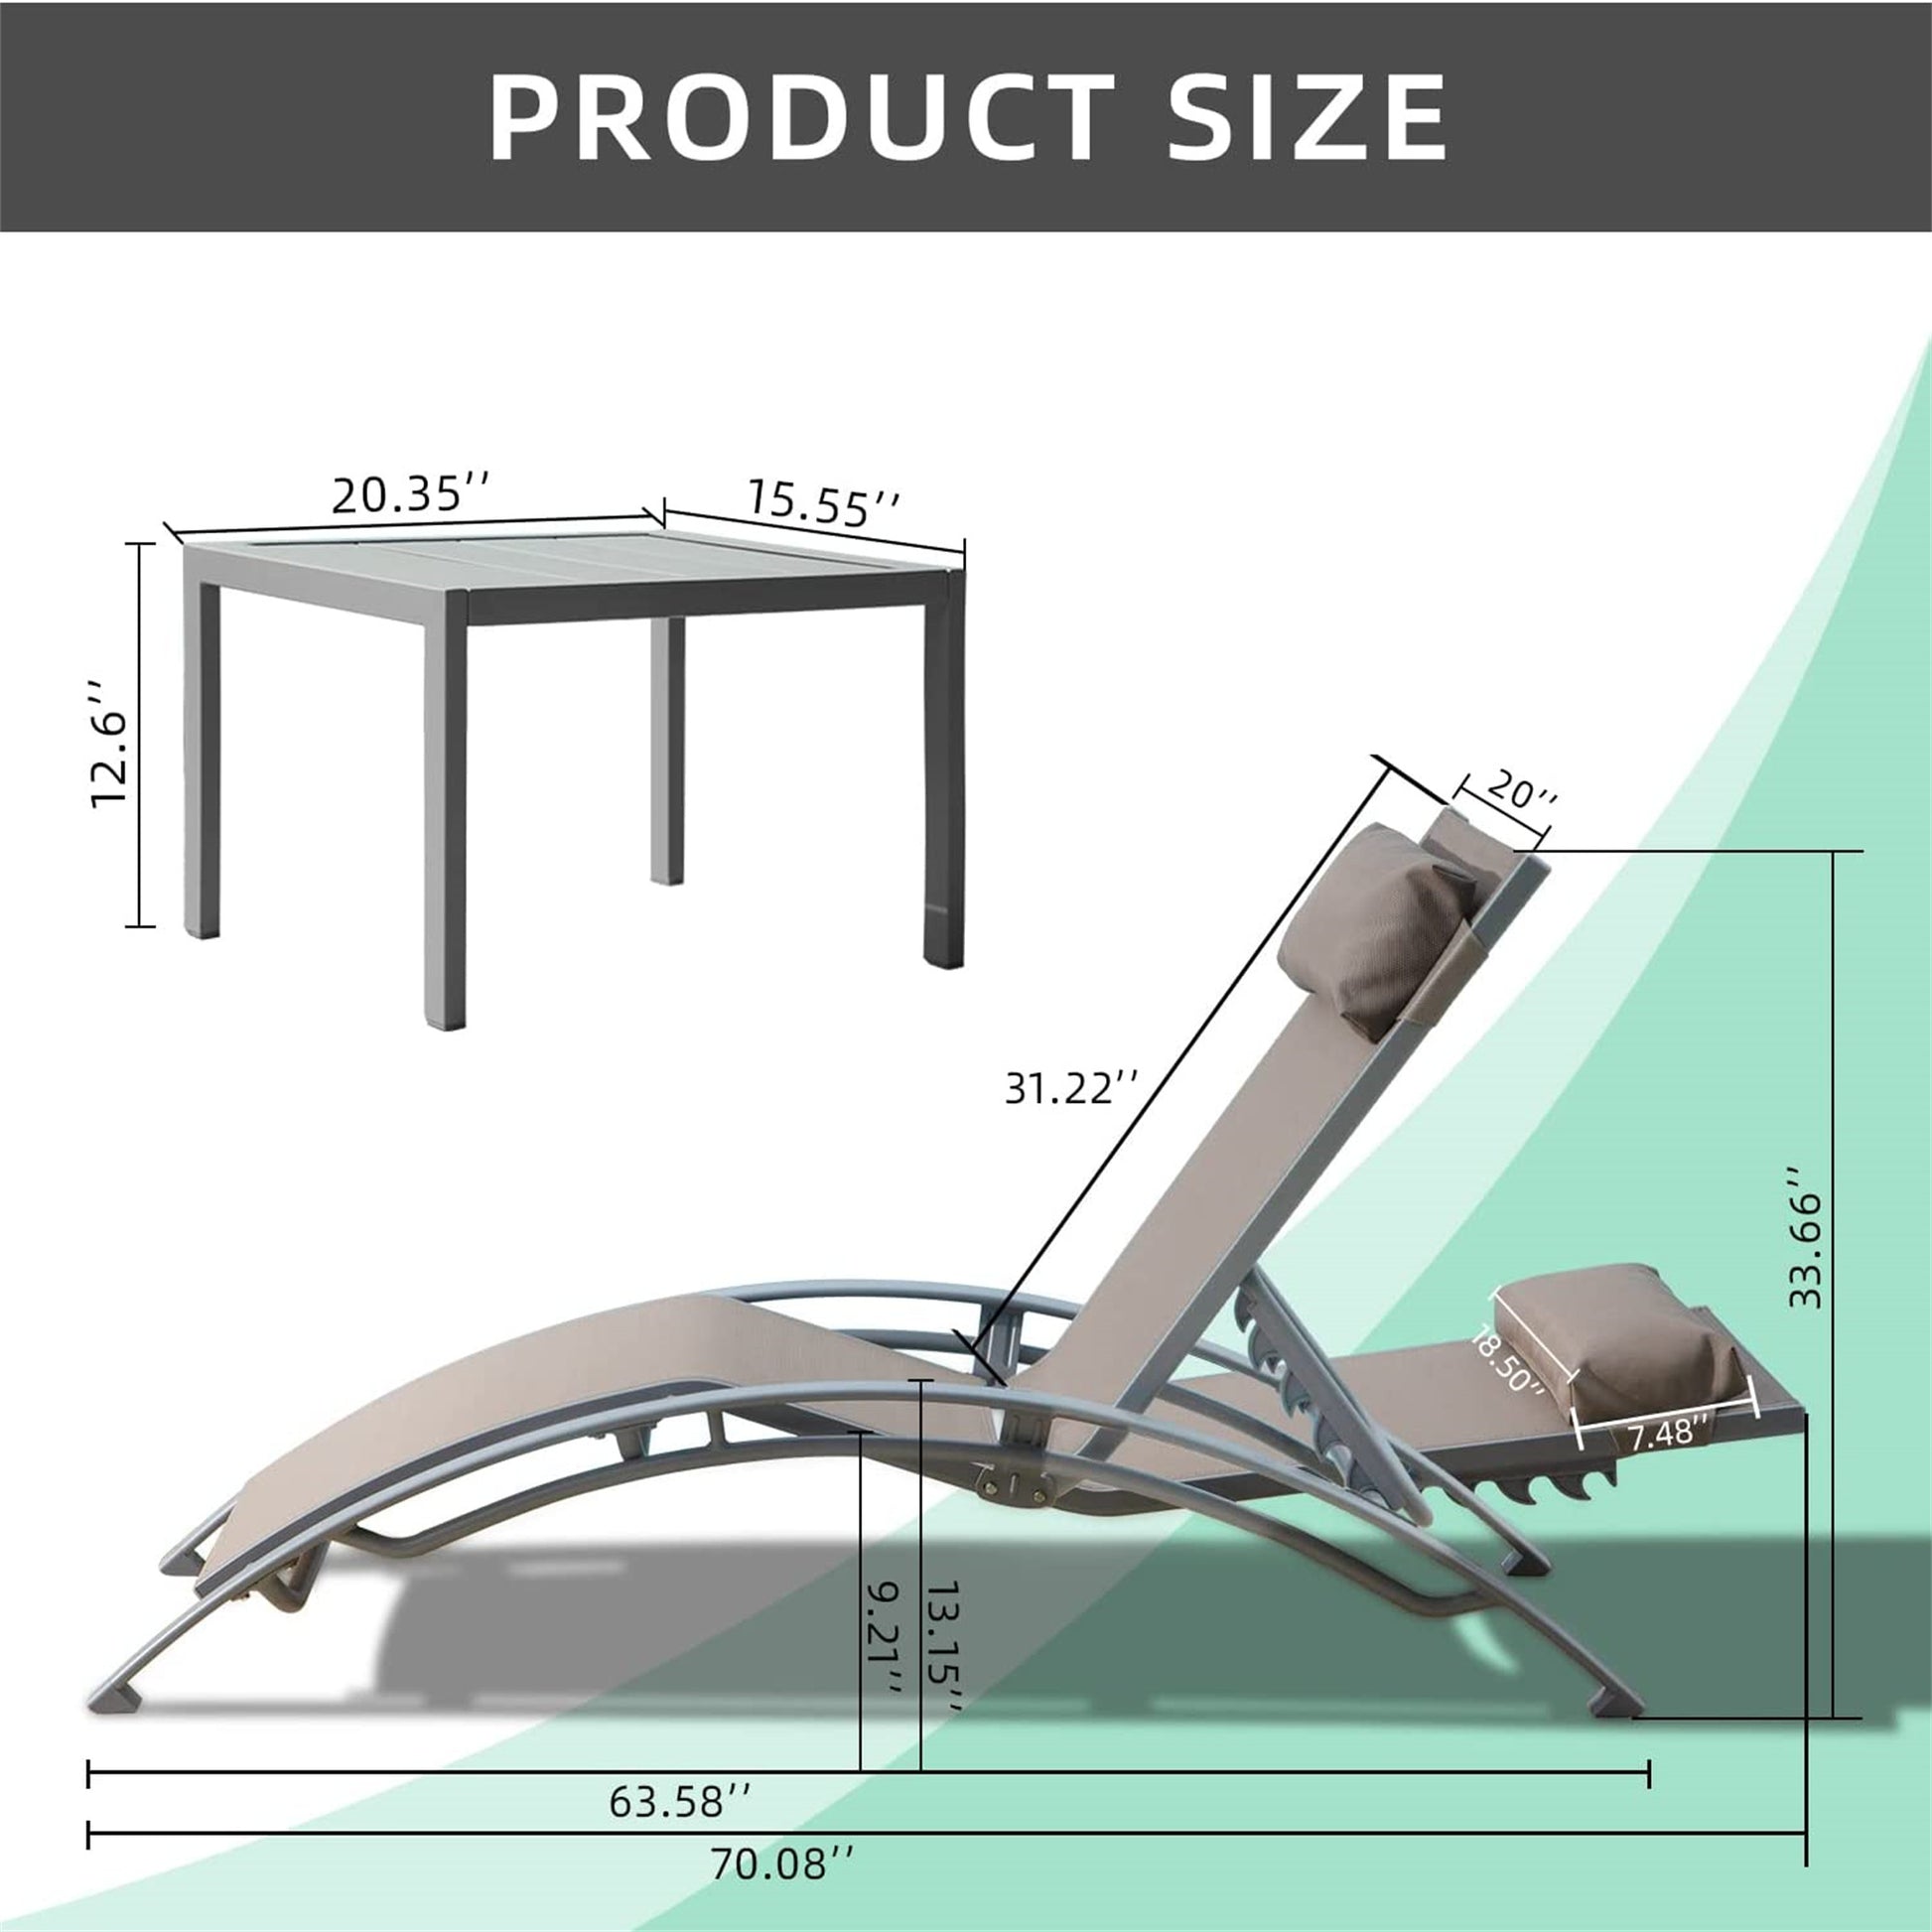 3 Adjustable Chairs, Metal Table (Khaki, 2 Chairs + 1 Table)